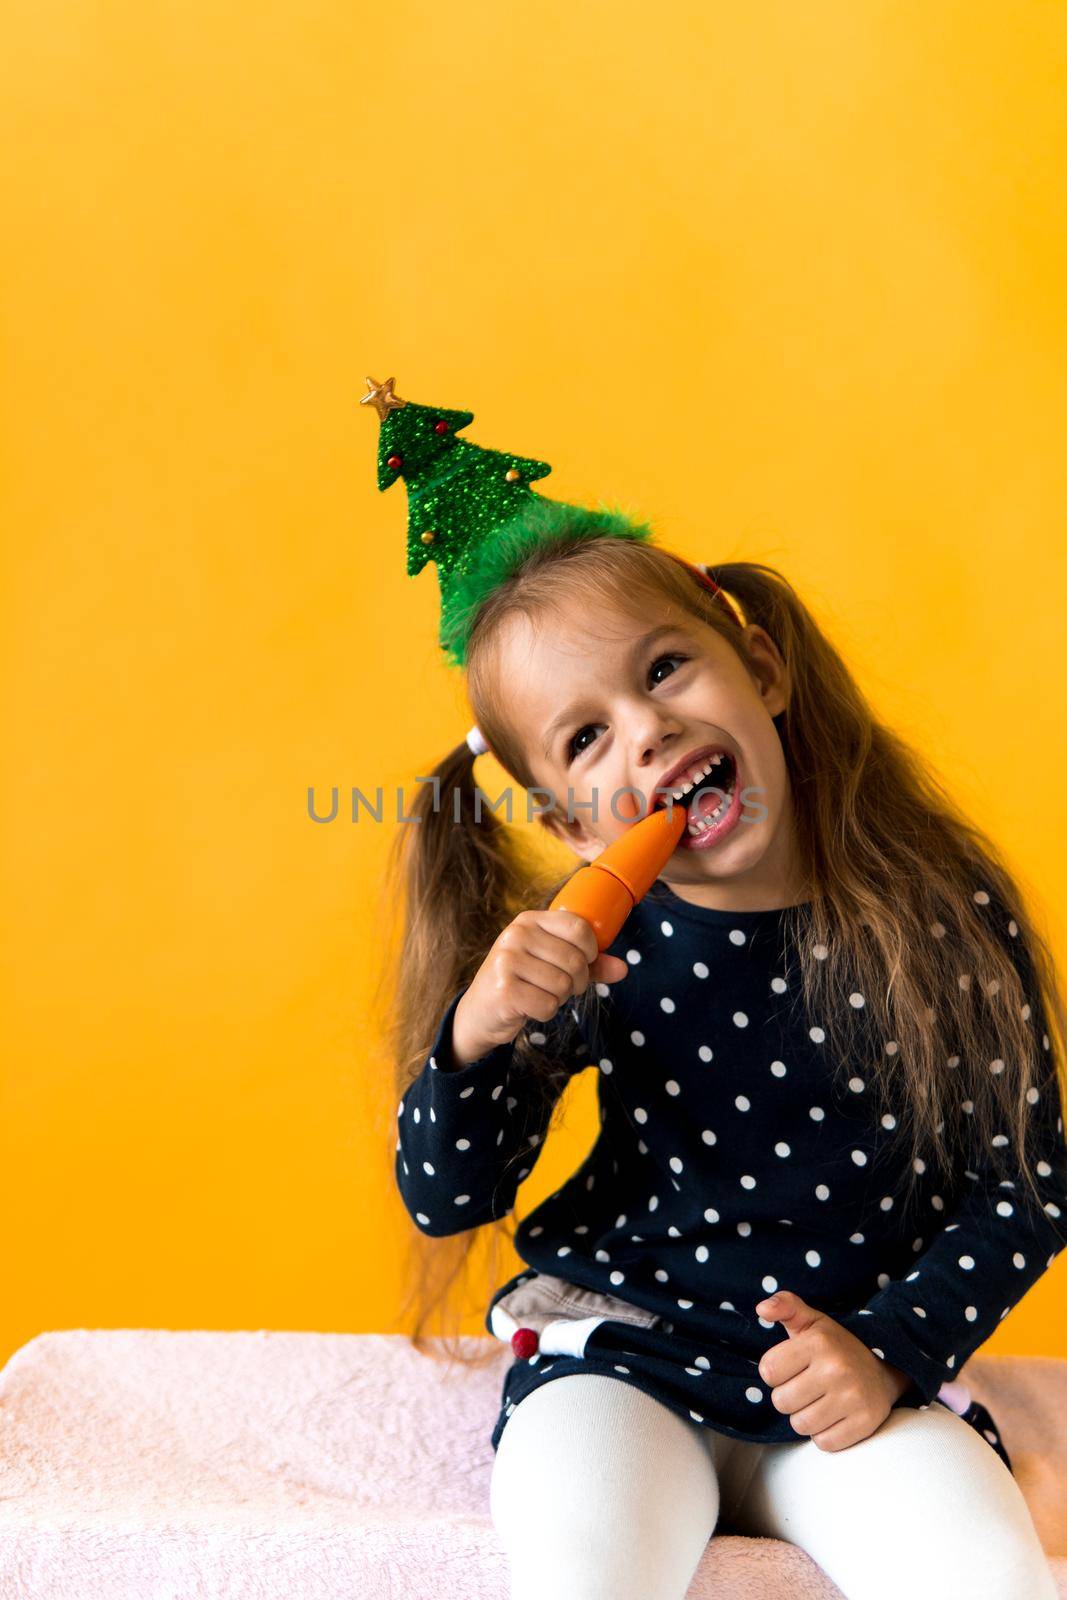 Portrait positive cheerful smiling happy little schoolgirl girl Christmas tree decoration polka dot dress biting eat orange carrots on orange background. New year, holiday, celebration, winter concept.